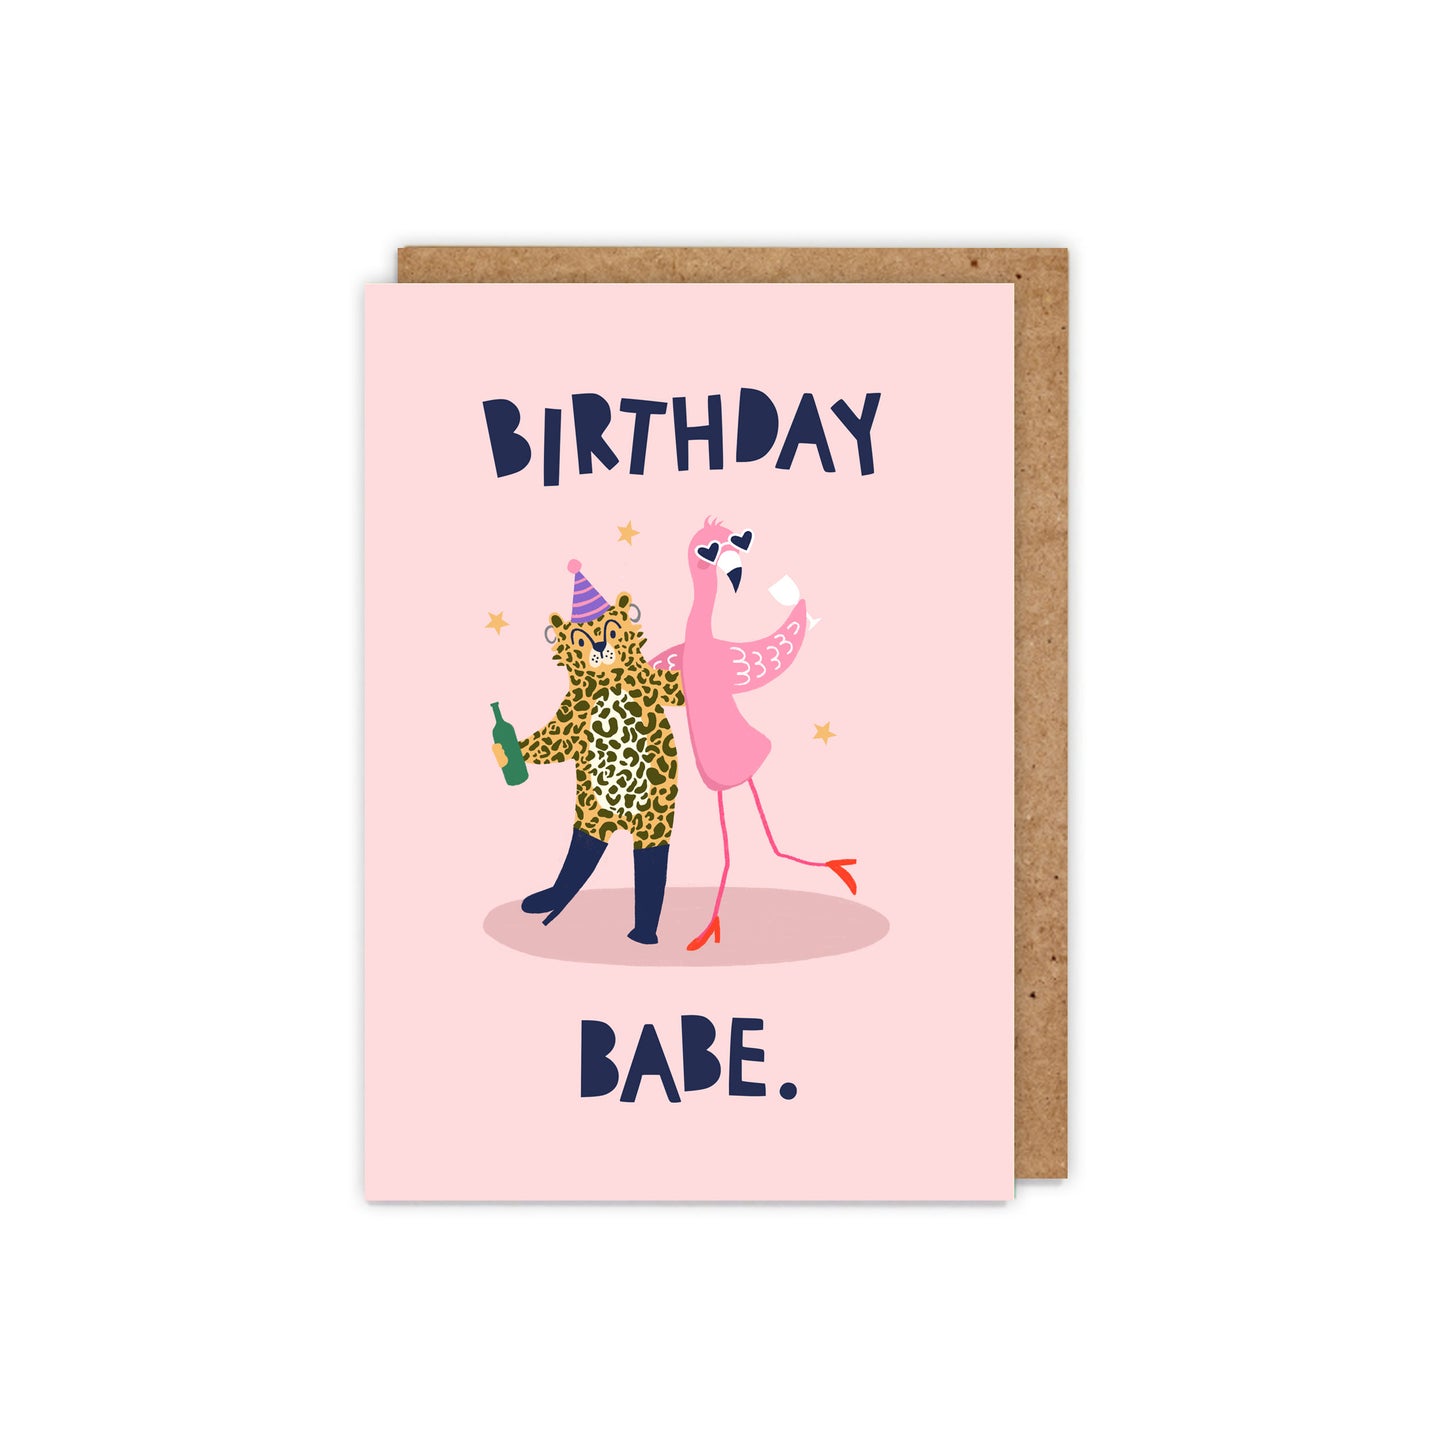 Birthday Babe! Friendship Birthday Card